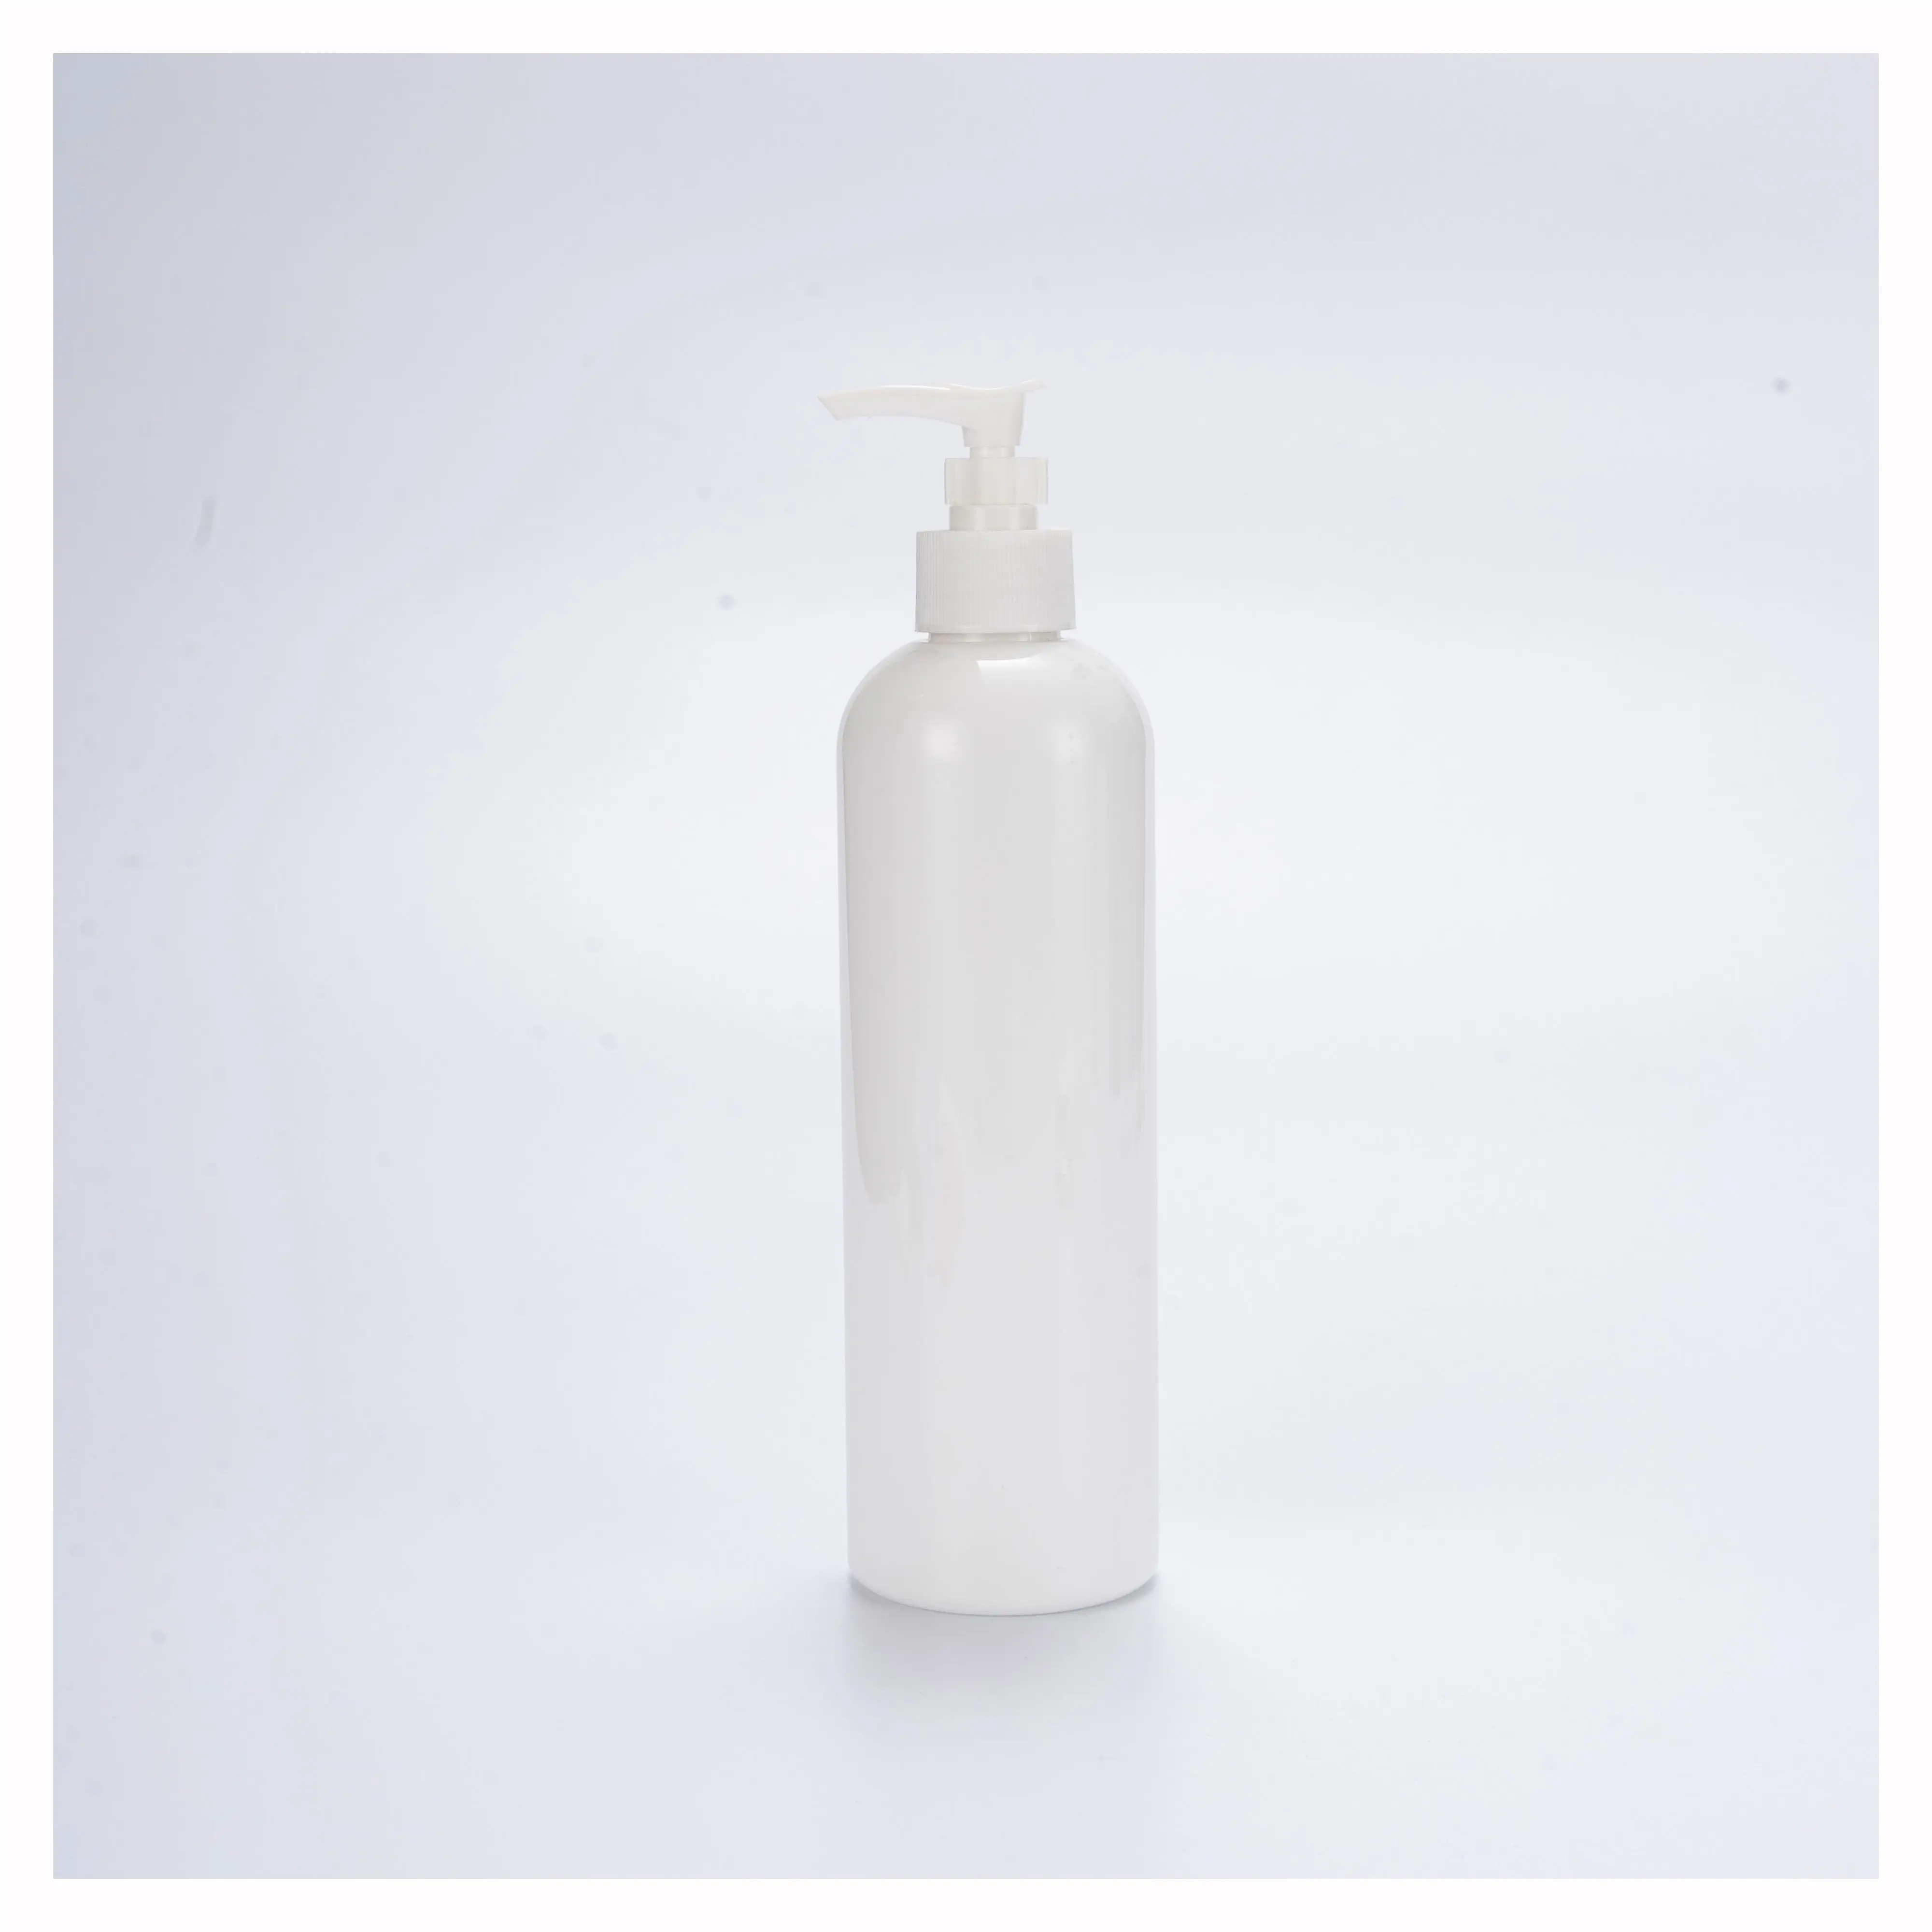 Botol Plastik Avon Quain 250Ml, Penjualan Terbaik Botol Pet Plastik Hitam Murah Atasan Cakram